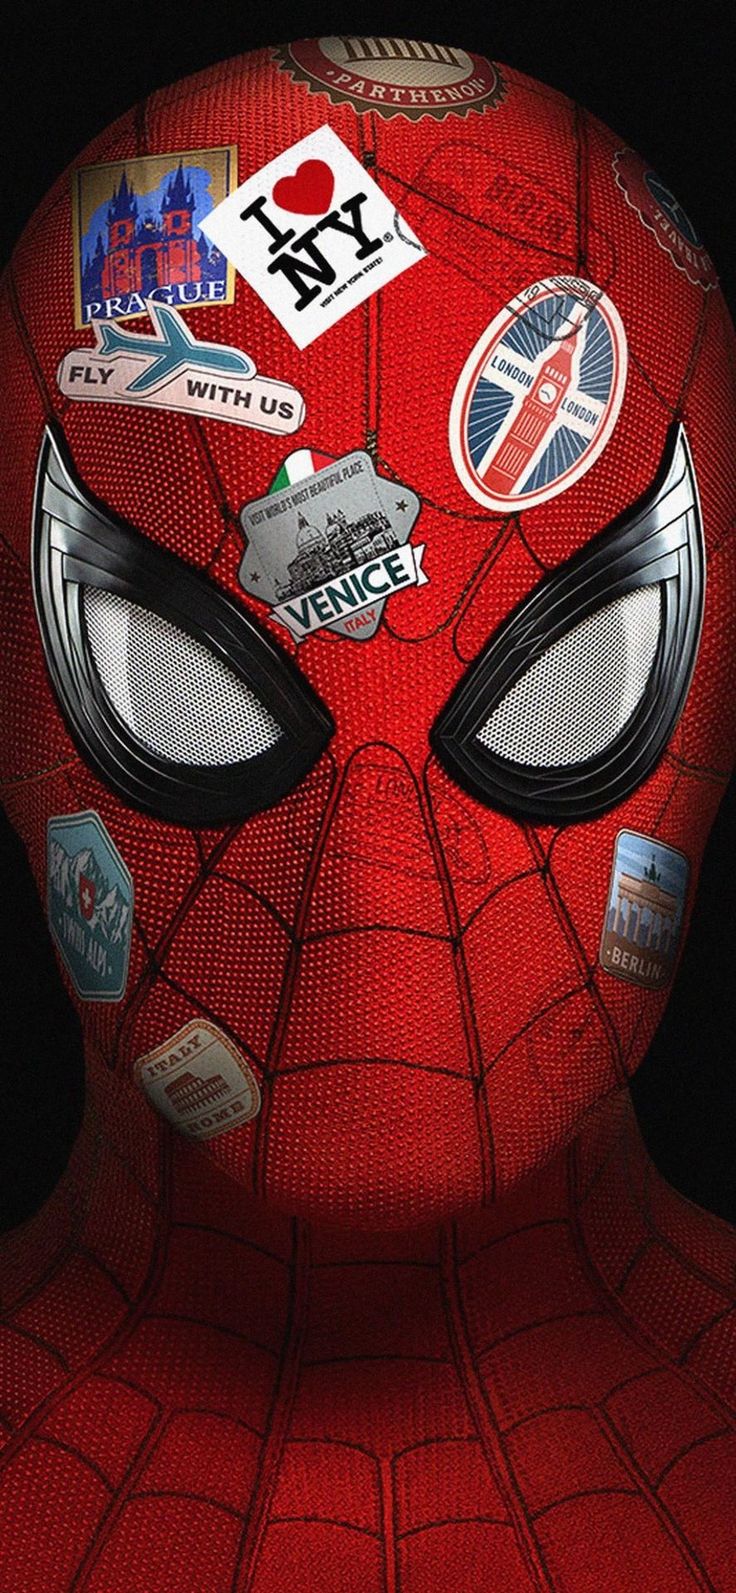 Just Marvel.. . Kaws iphone wallpaper, iPhone 9 wallpaper, Apple logo wallpaper iphone